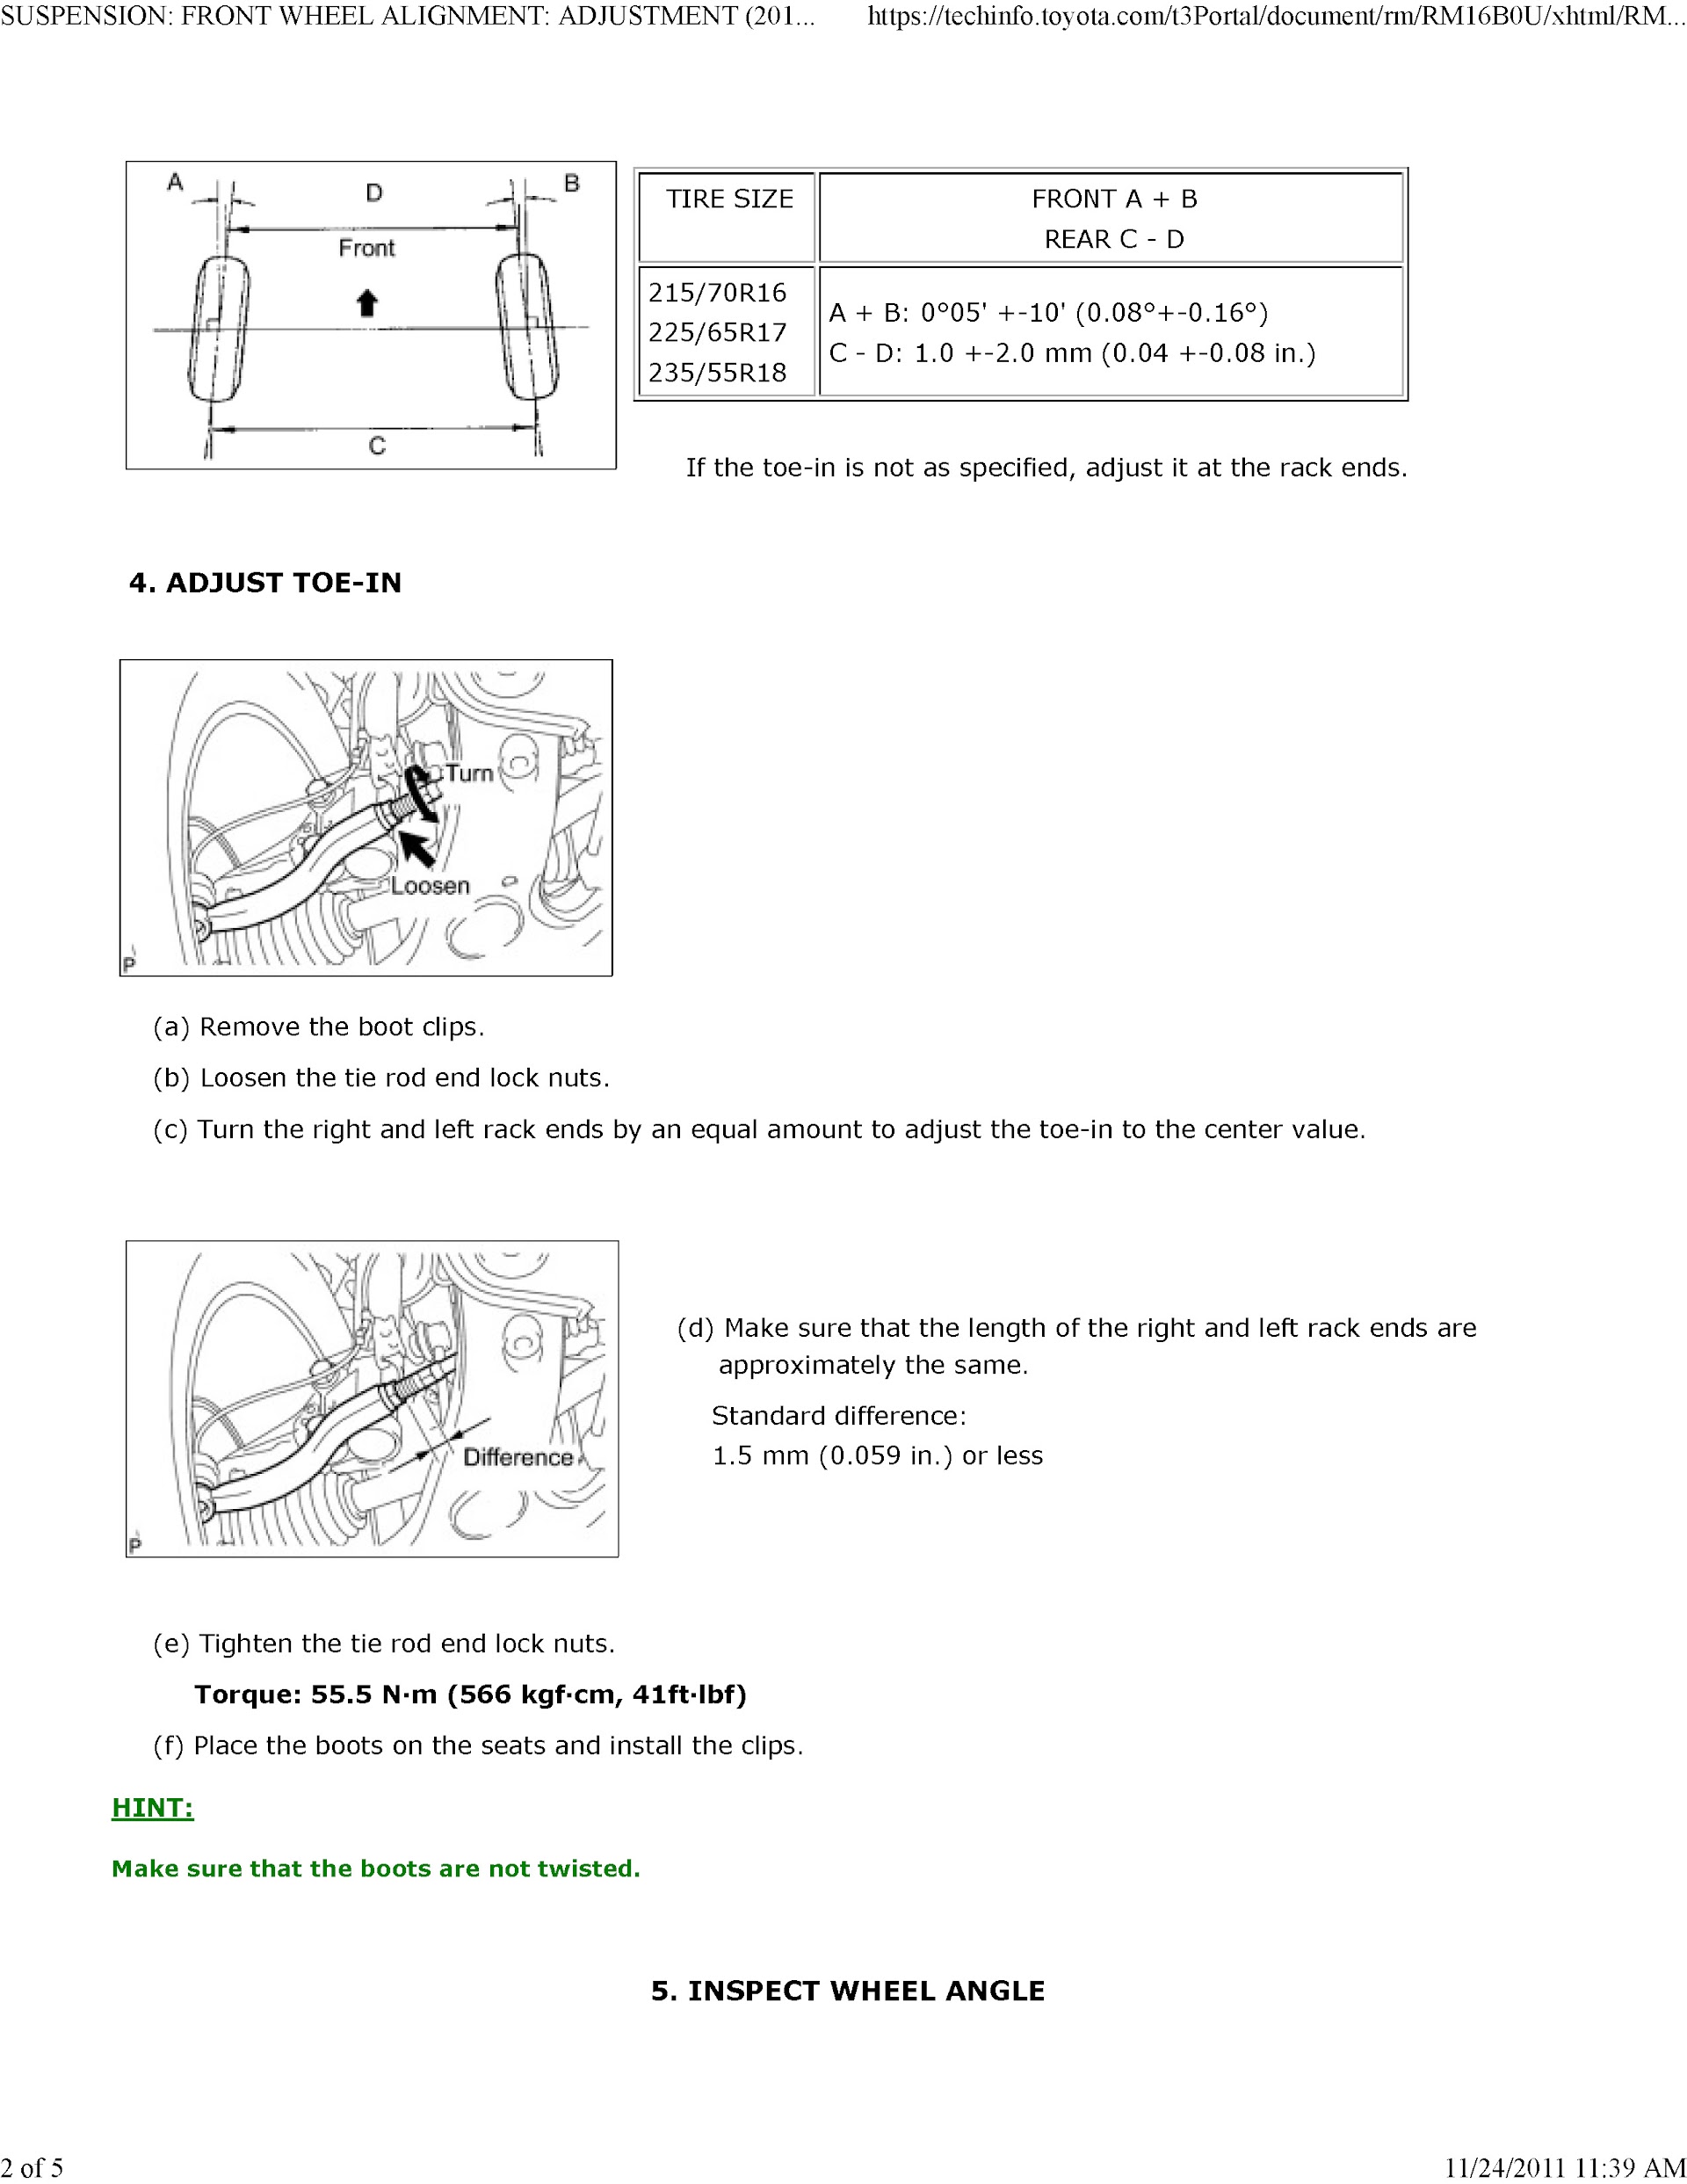 2011-2012 Toyota RAV4 Repair Manual front Suspension